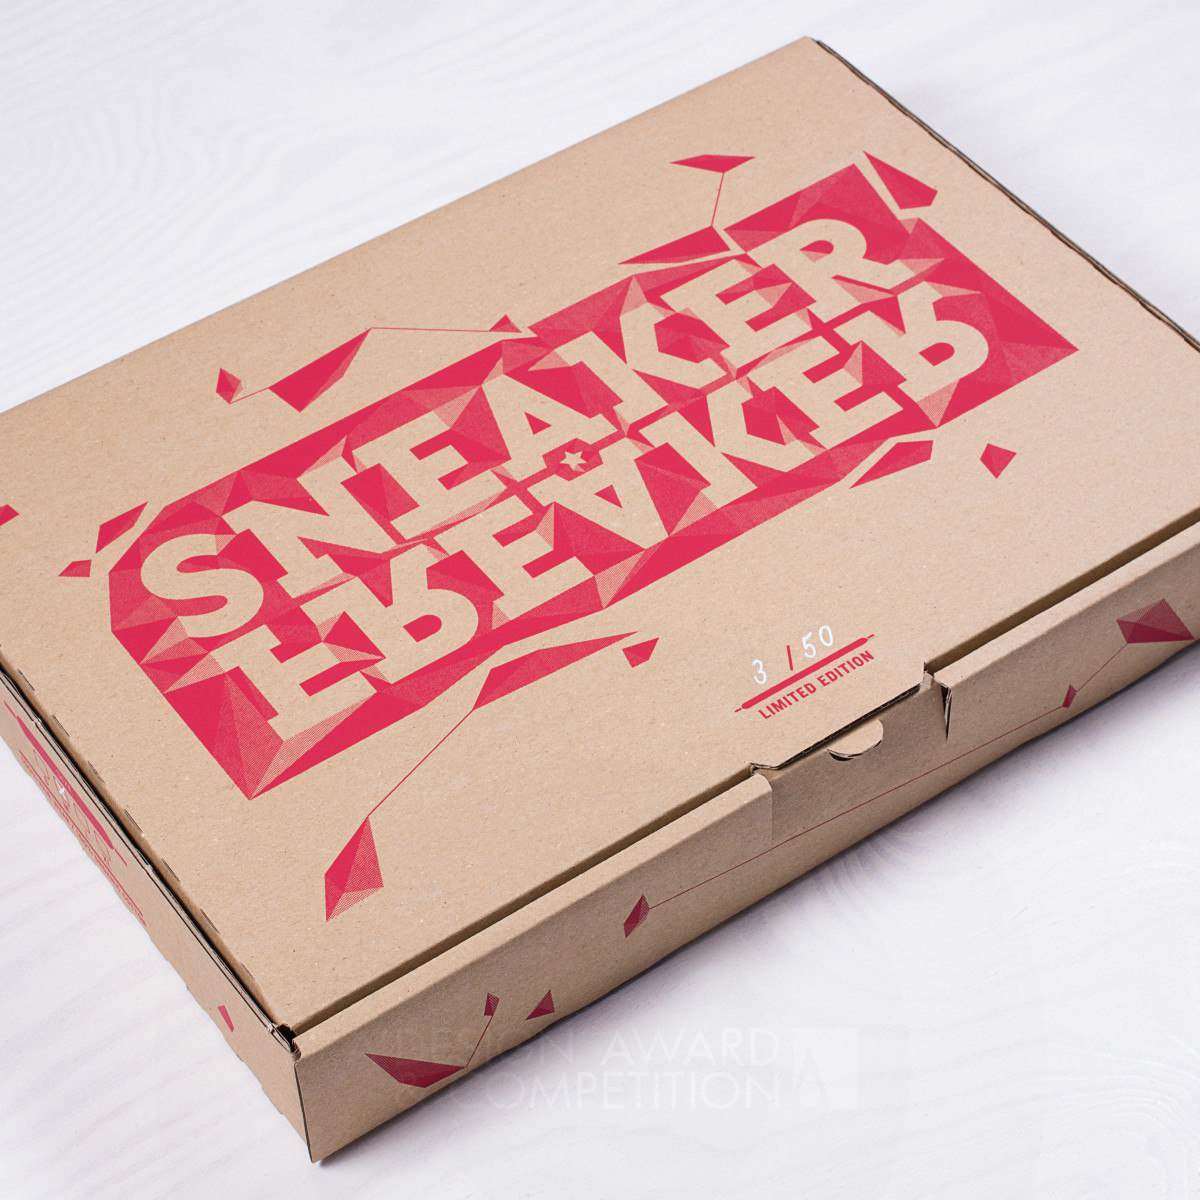 Sneaker Freaker Limited Edition T-Shirt Packaging by eskju · Bretz & Jung